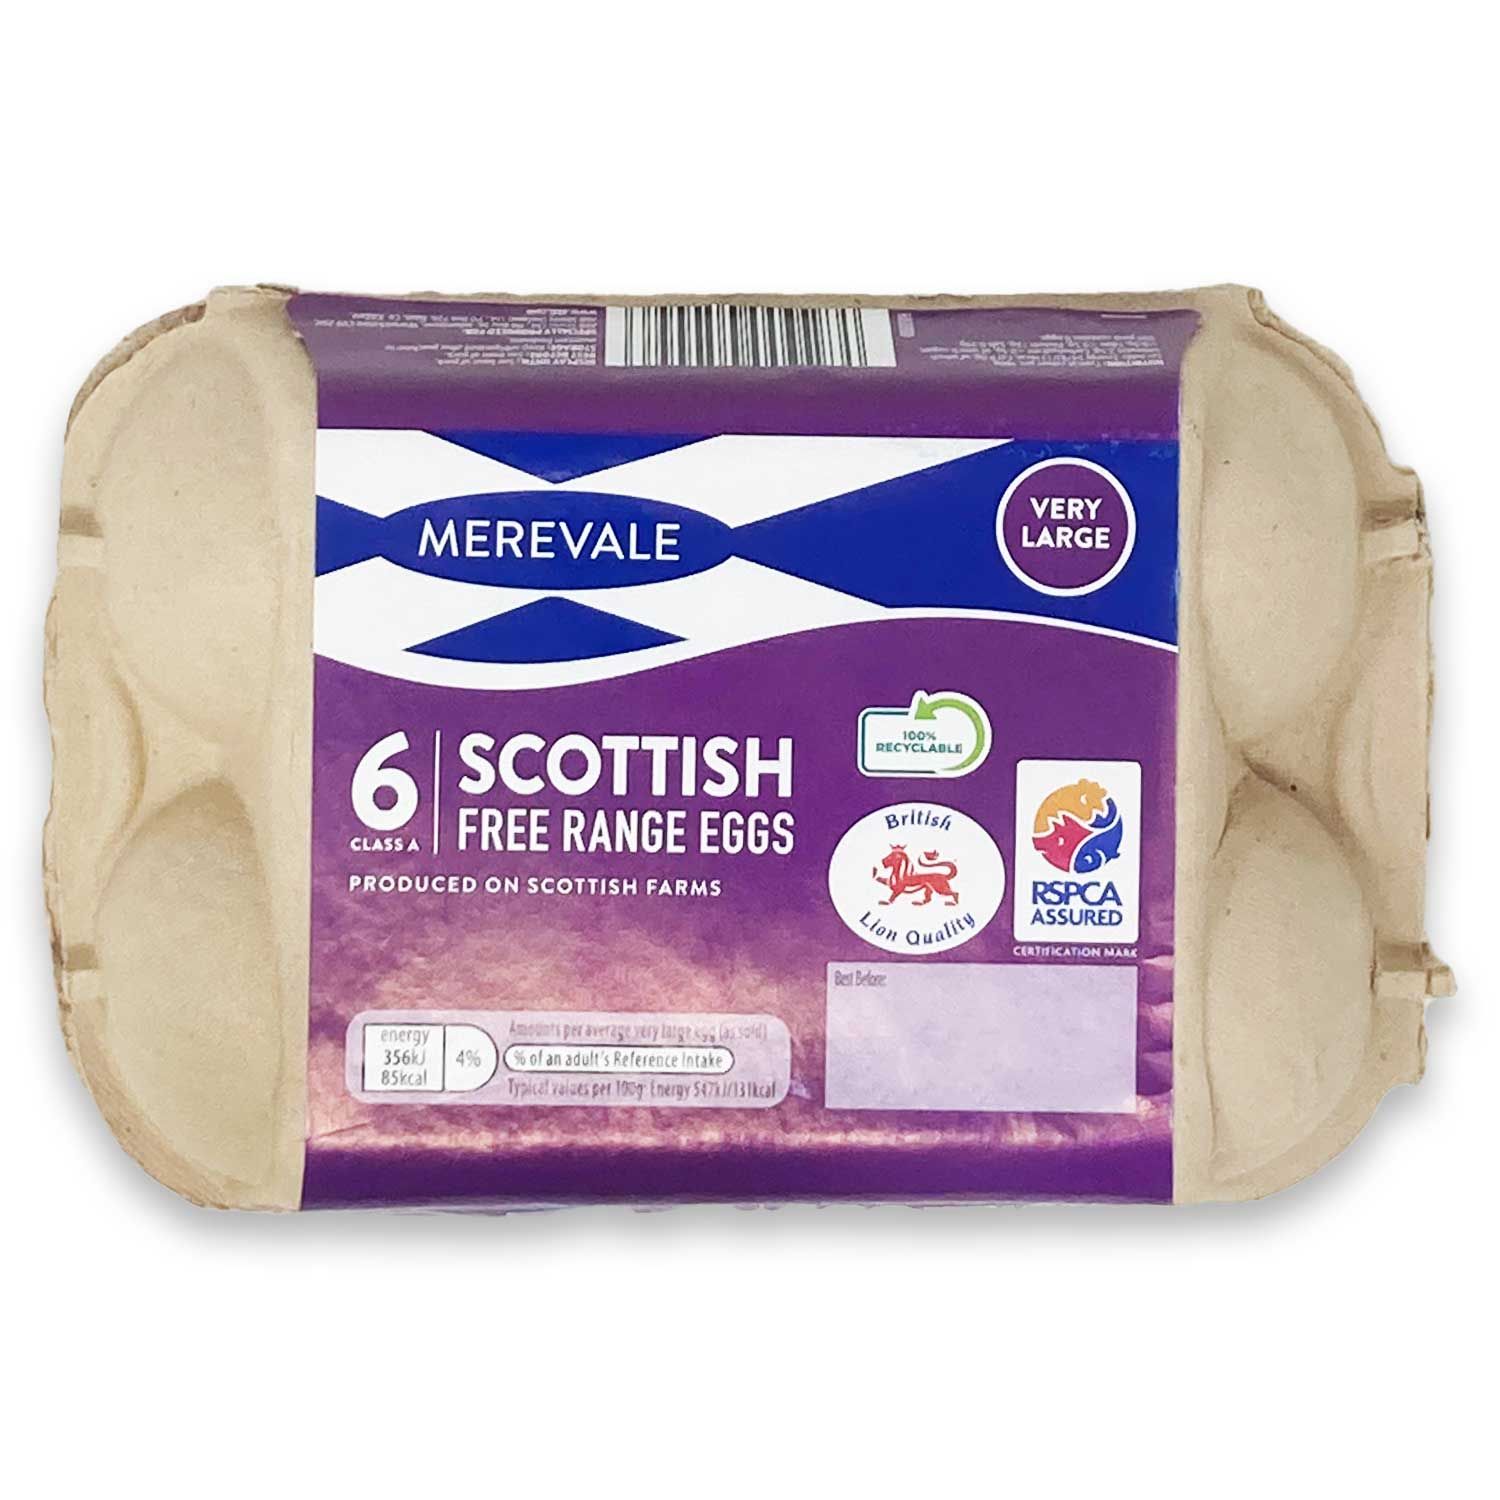 Merevale Very Large Scottish Free Range Eggs 6 Pack